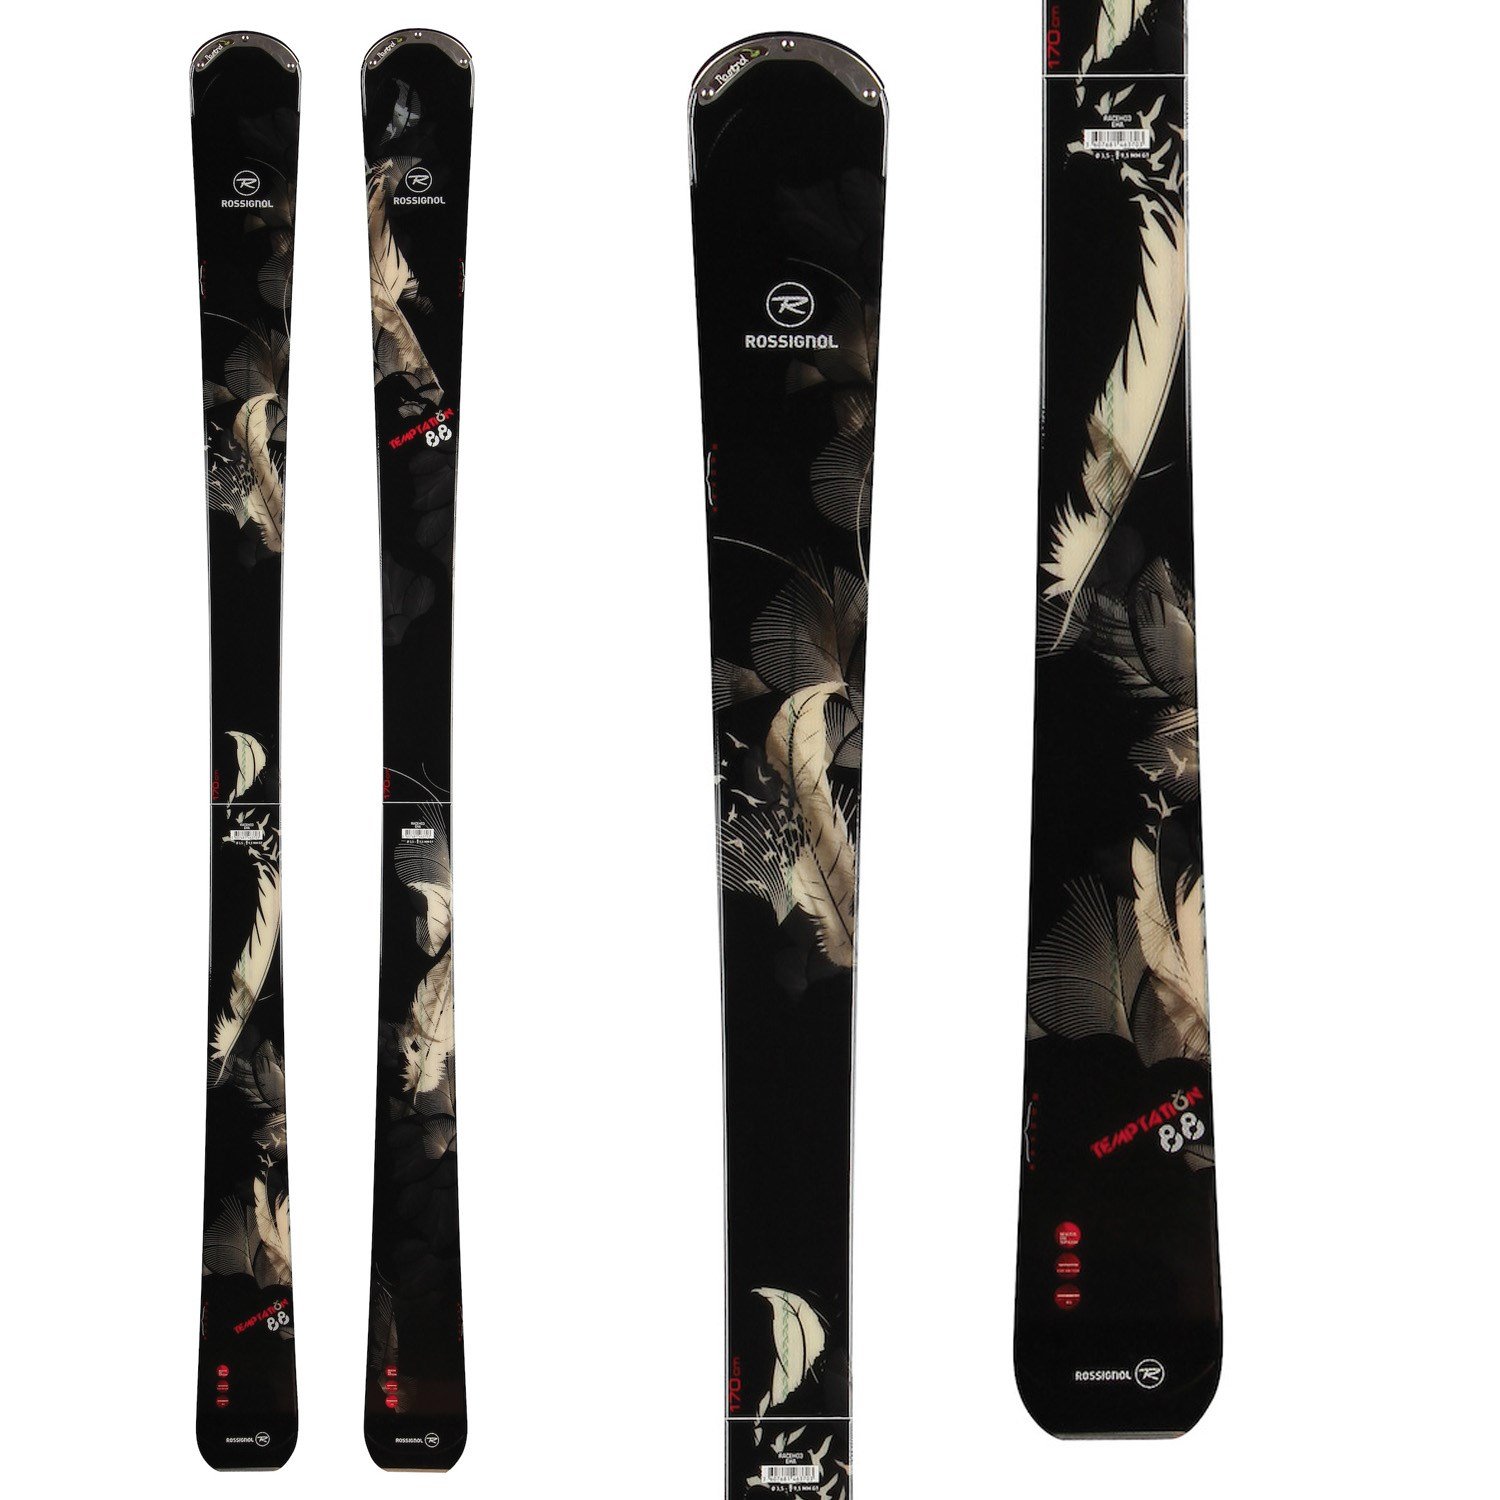 Rossignol Temptation 88 Skis - Women's 2014 | evo